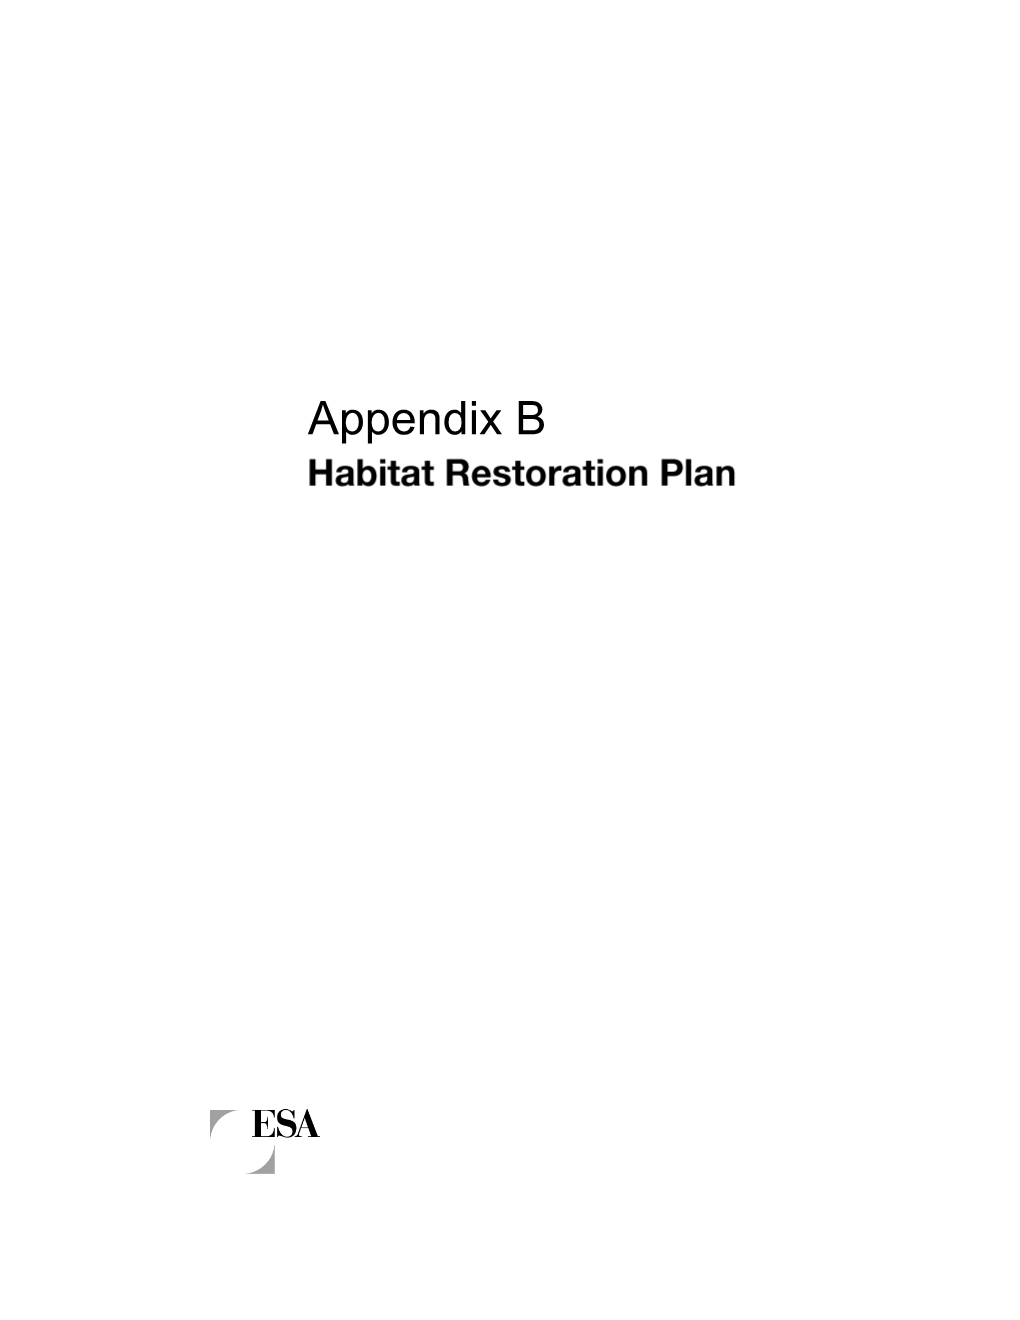 Appendix B Habitat Restoration Plan